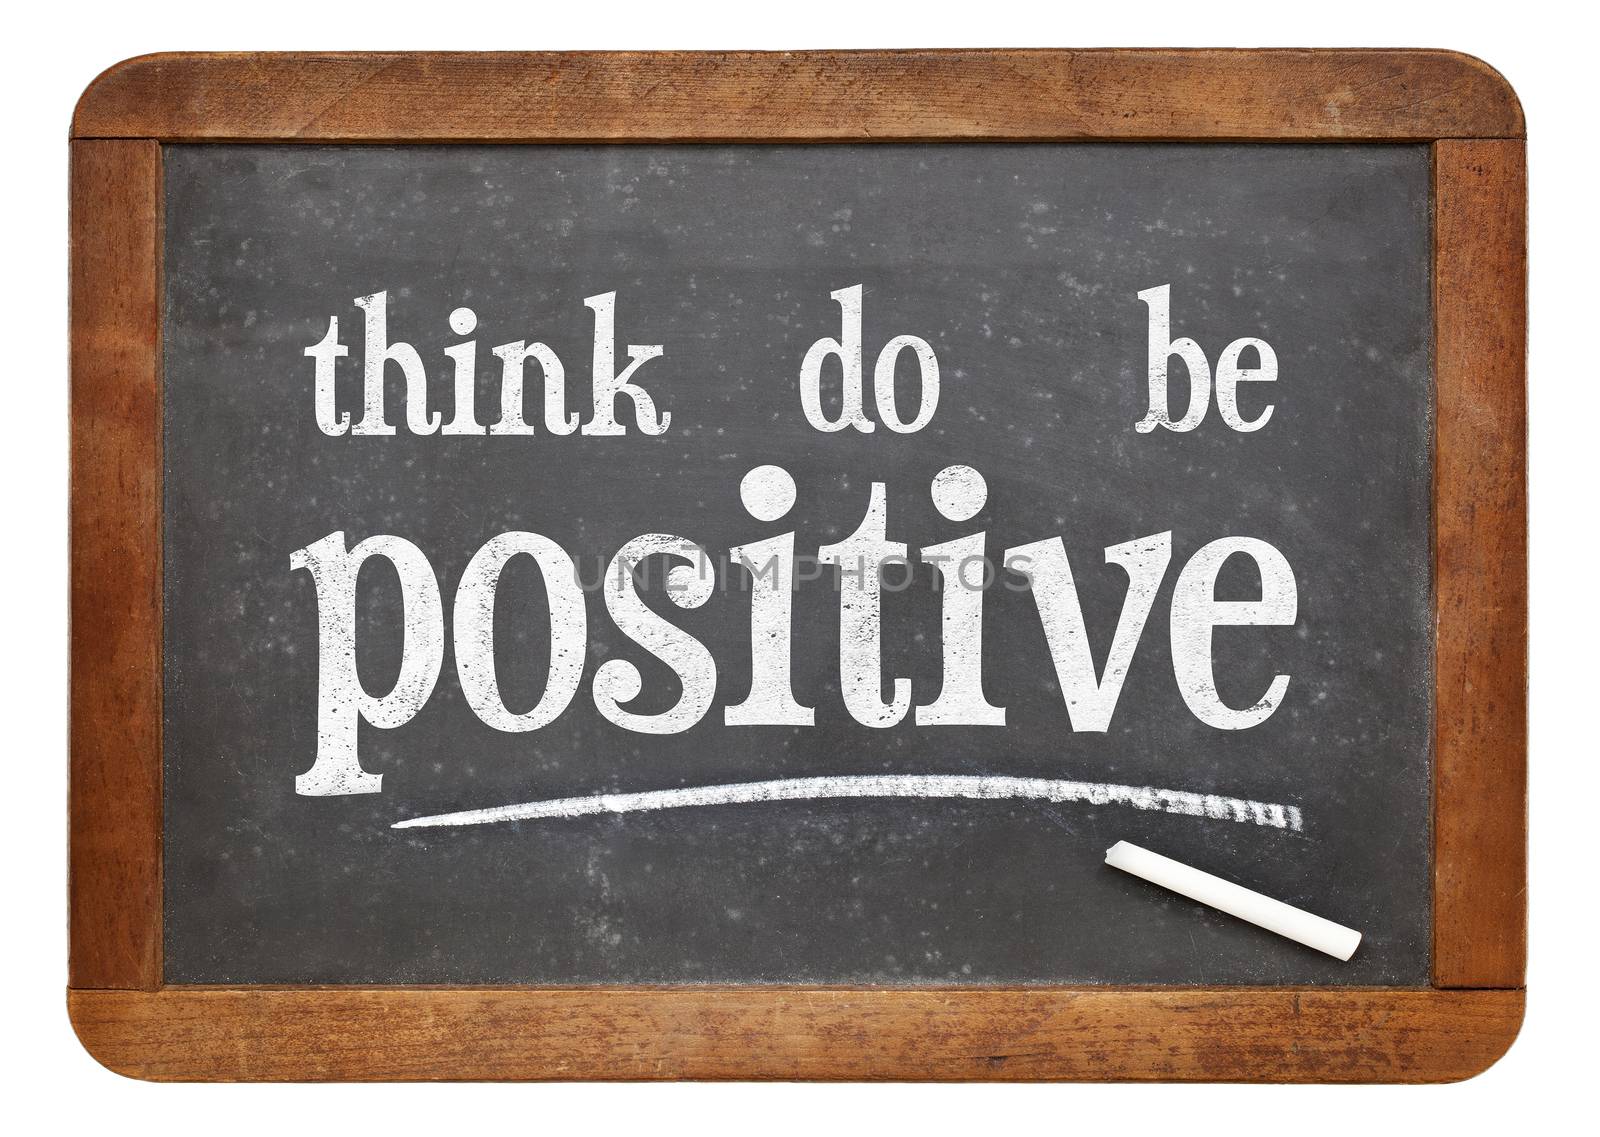 think, do, be positive - motivational concept on a vintage slate blackboard